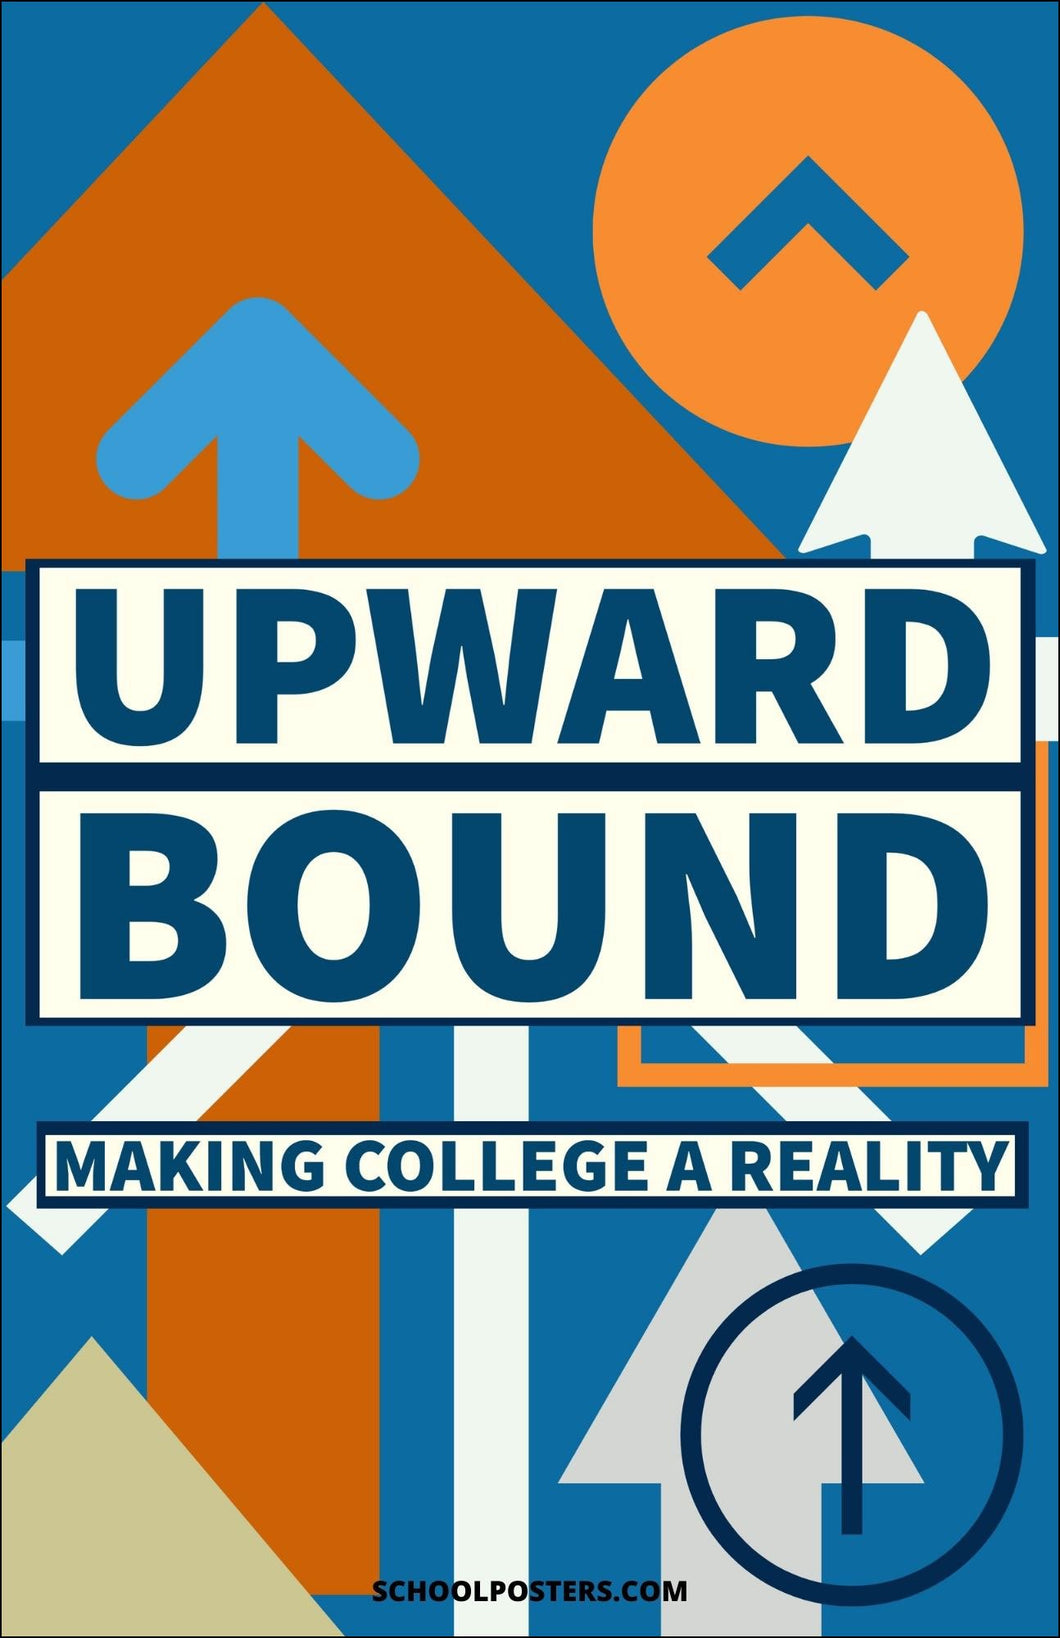 TRIO Upward Bound College Reality Poster